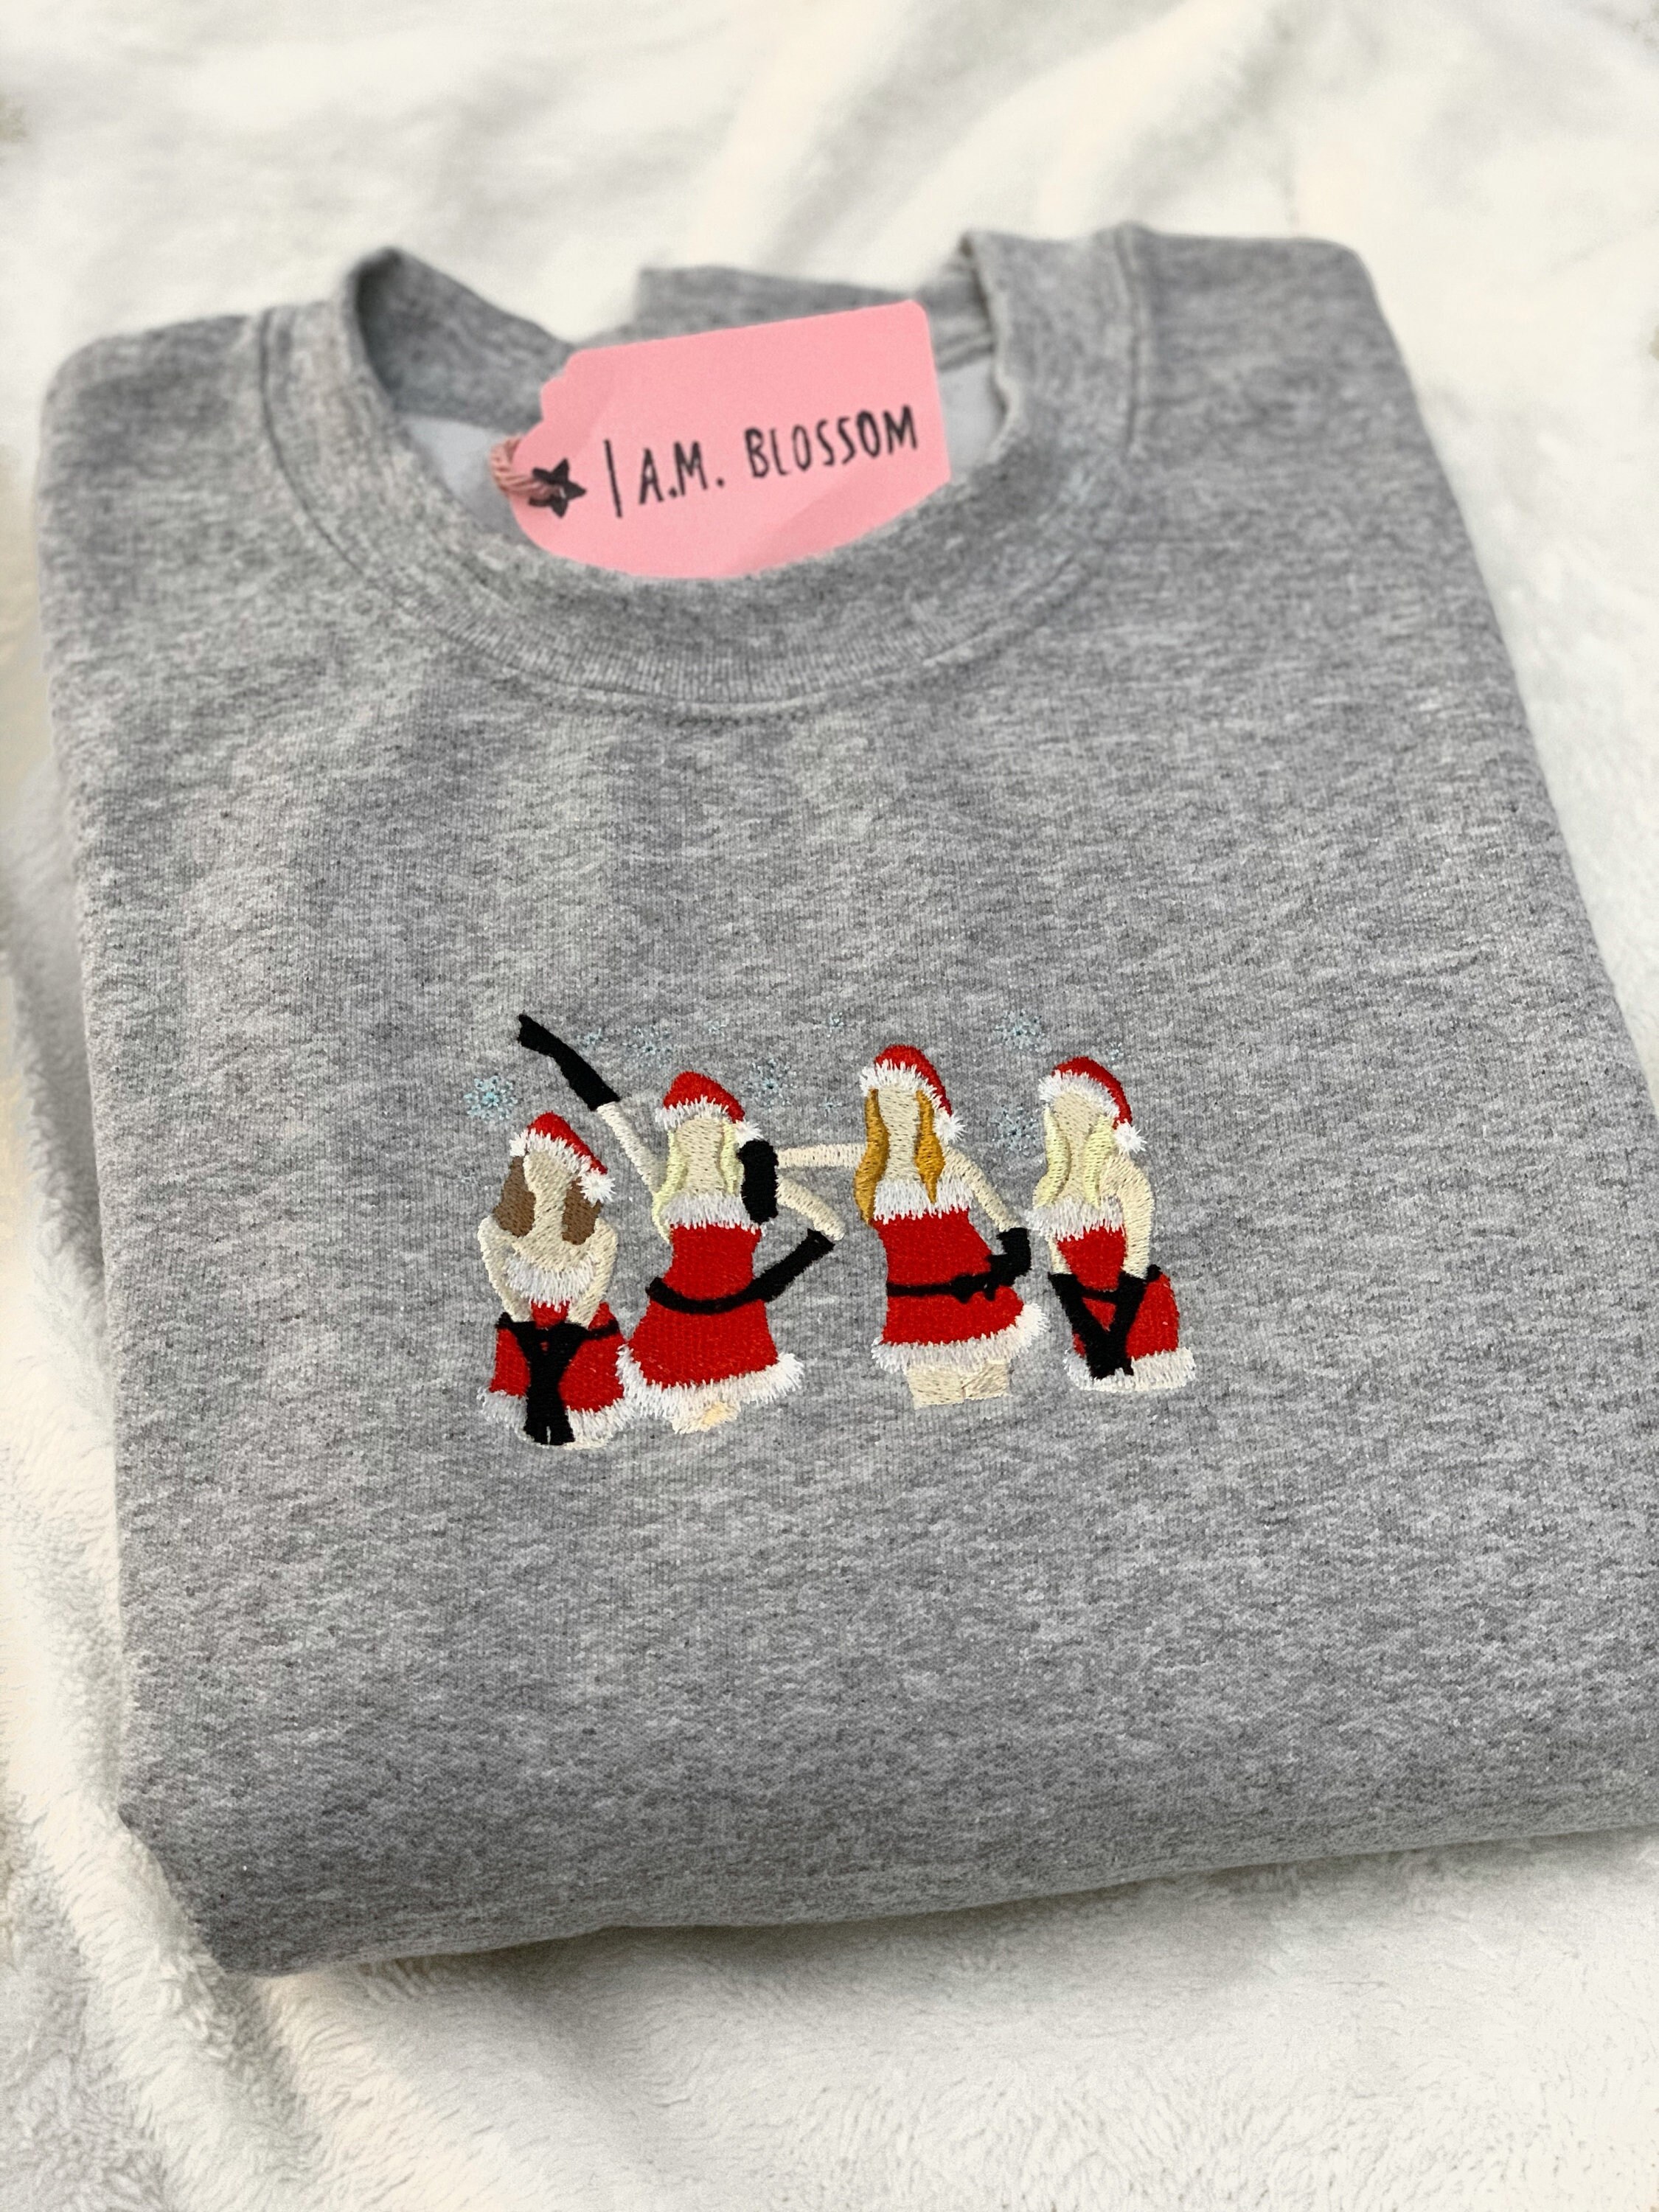 Mean Girls Santa's Helpers Oversized Sweatshirt